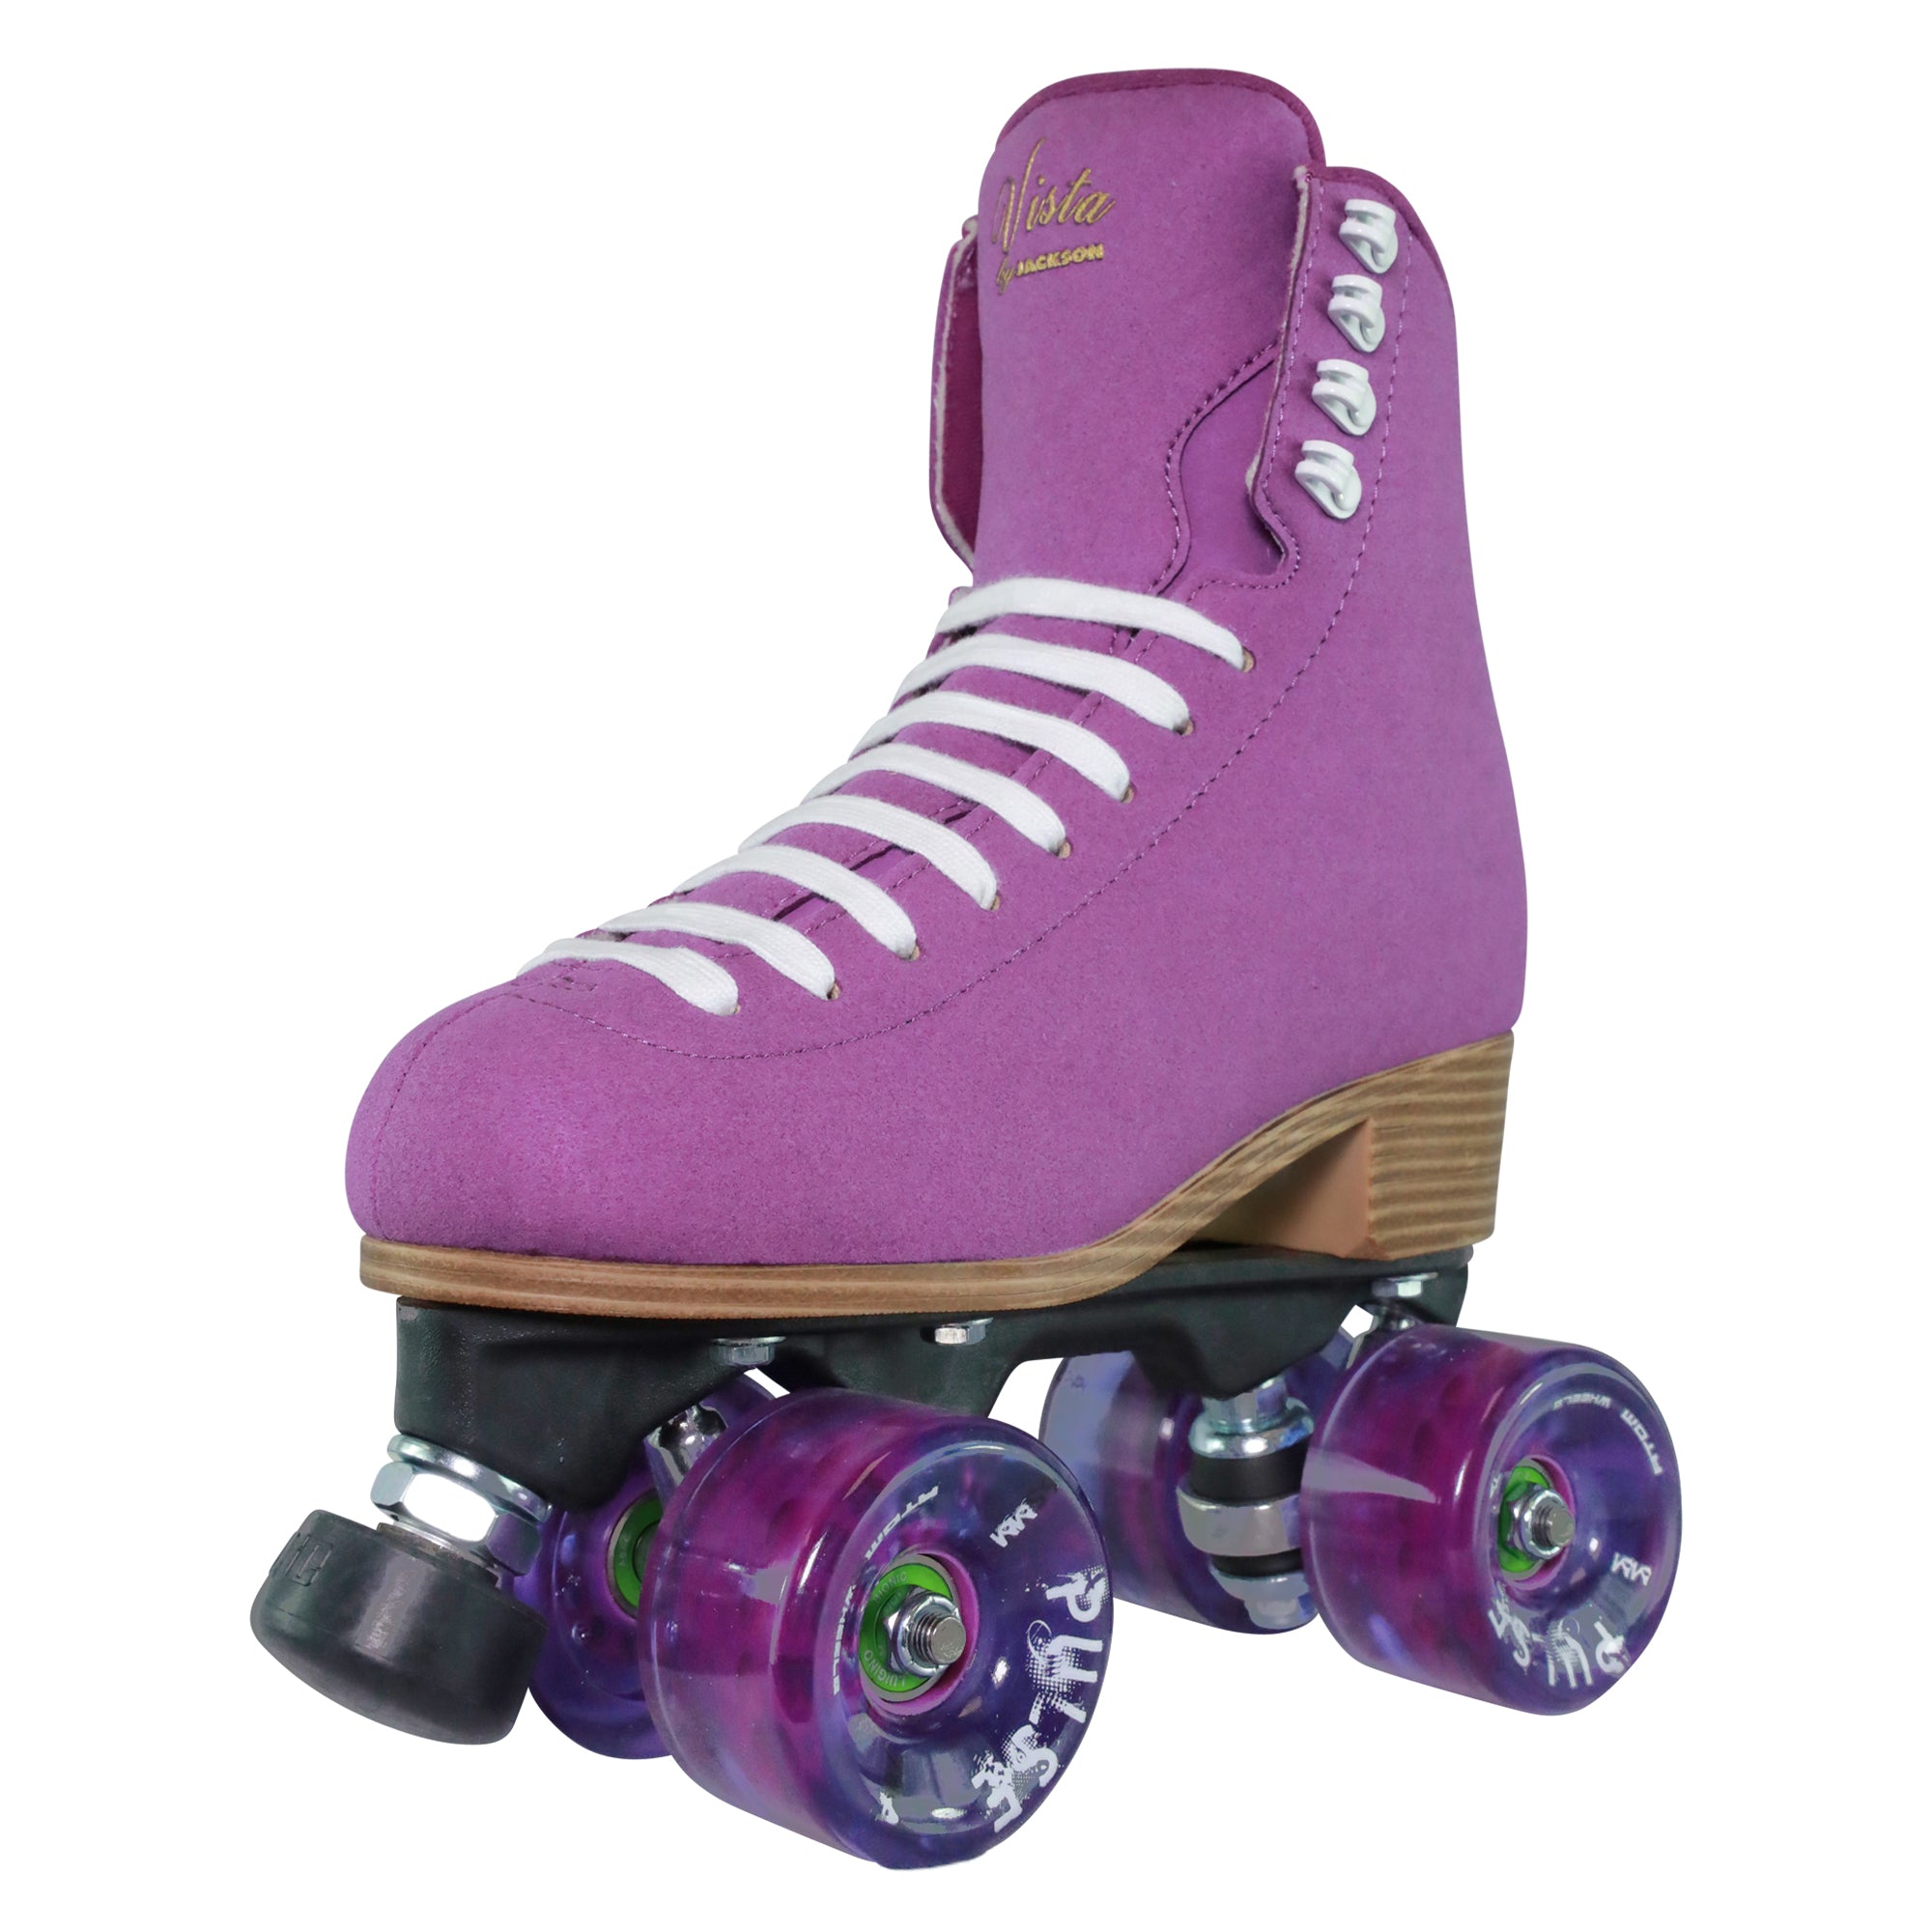 Jackson Vista Quad Roller Purple pulse wheels